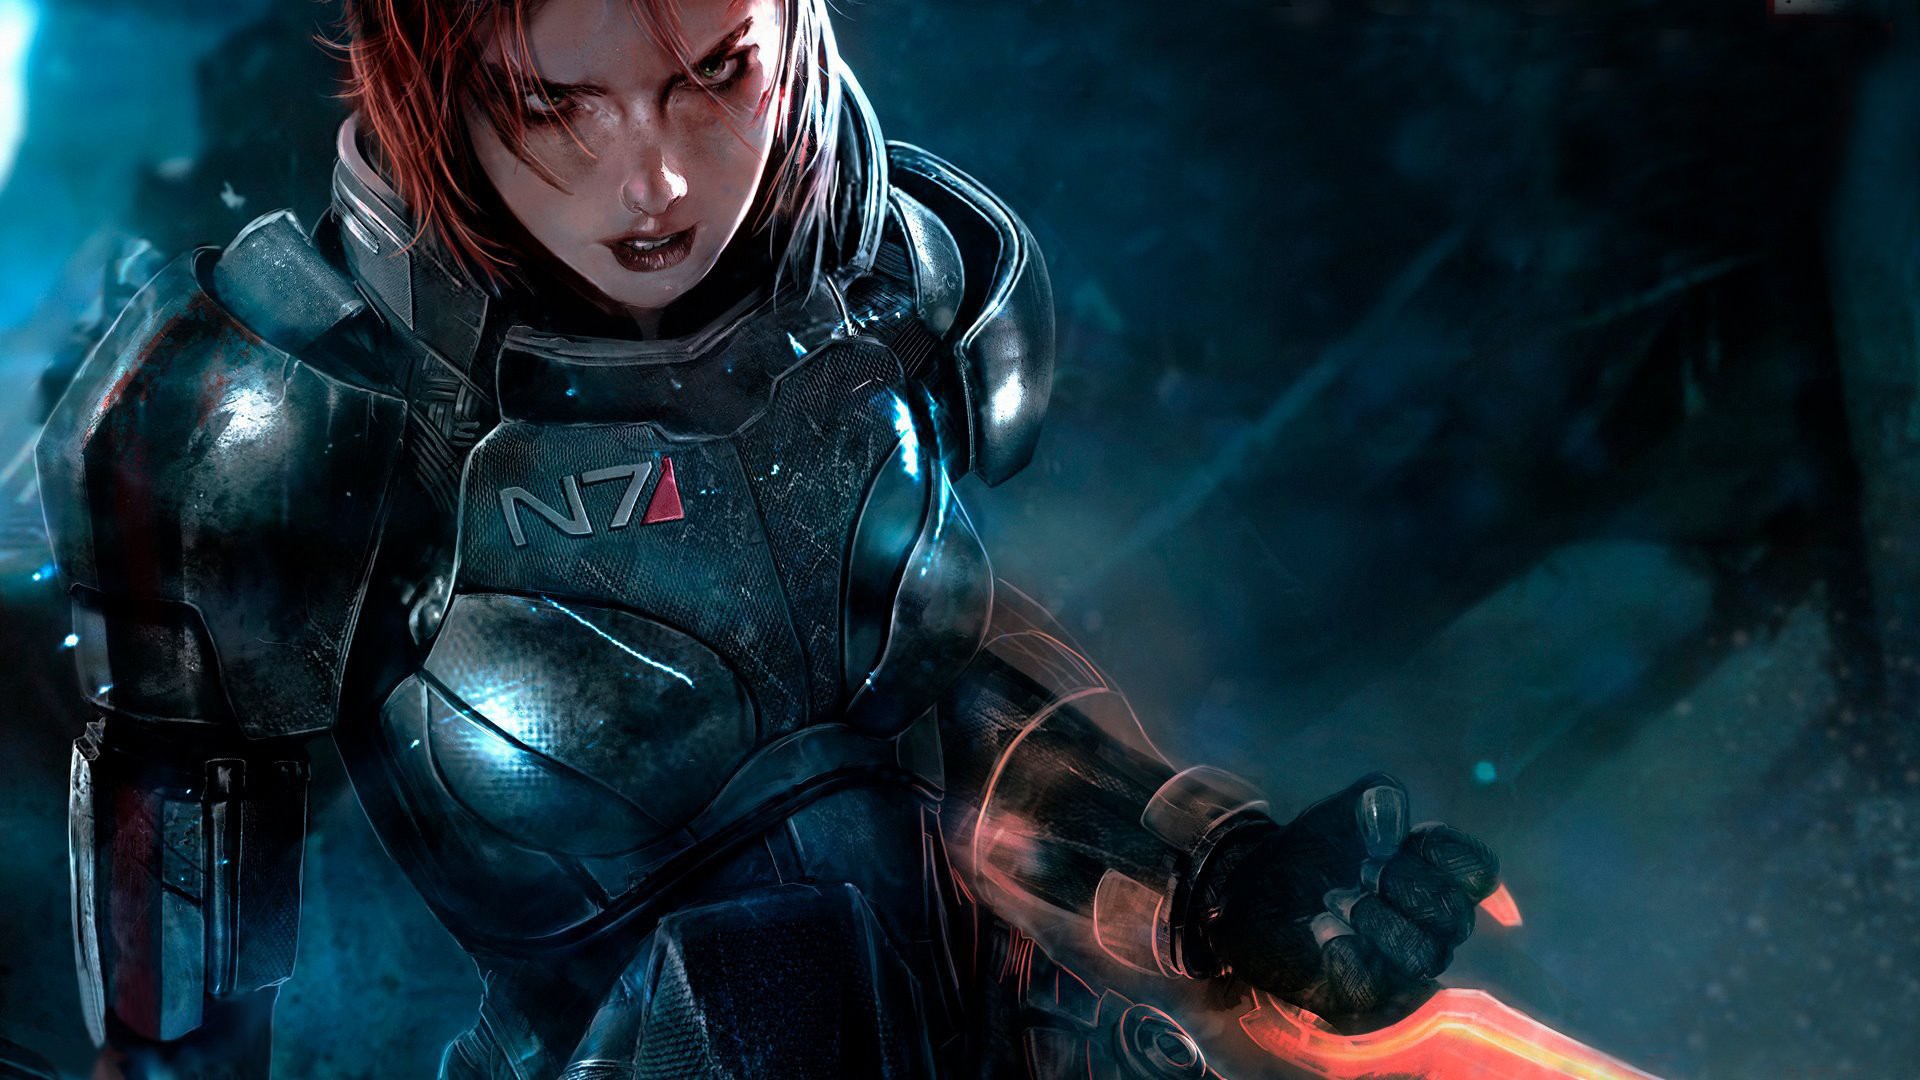 Mass Effect Commander Shepard Wallpapers Hd Desktop And Mobile Backgrounds 4635